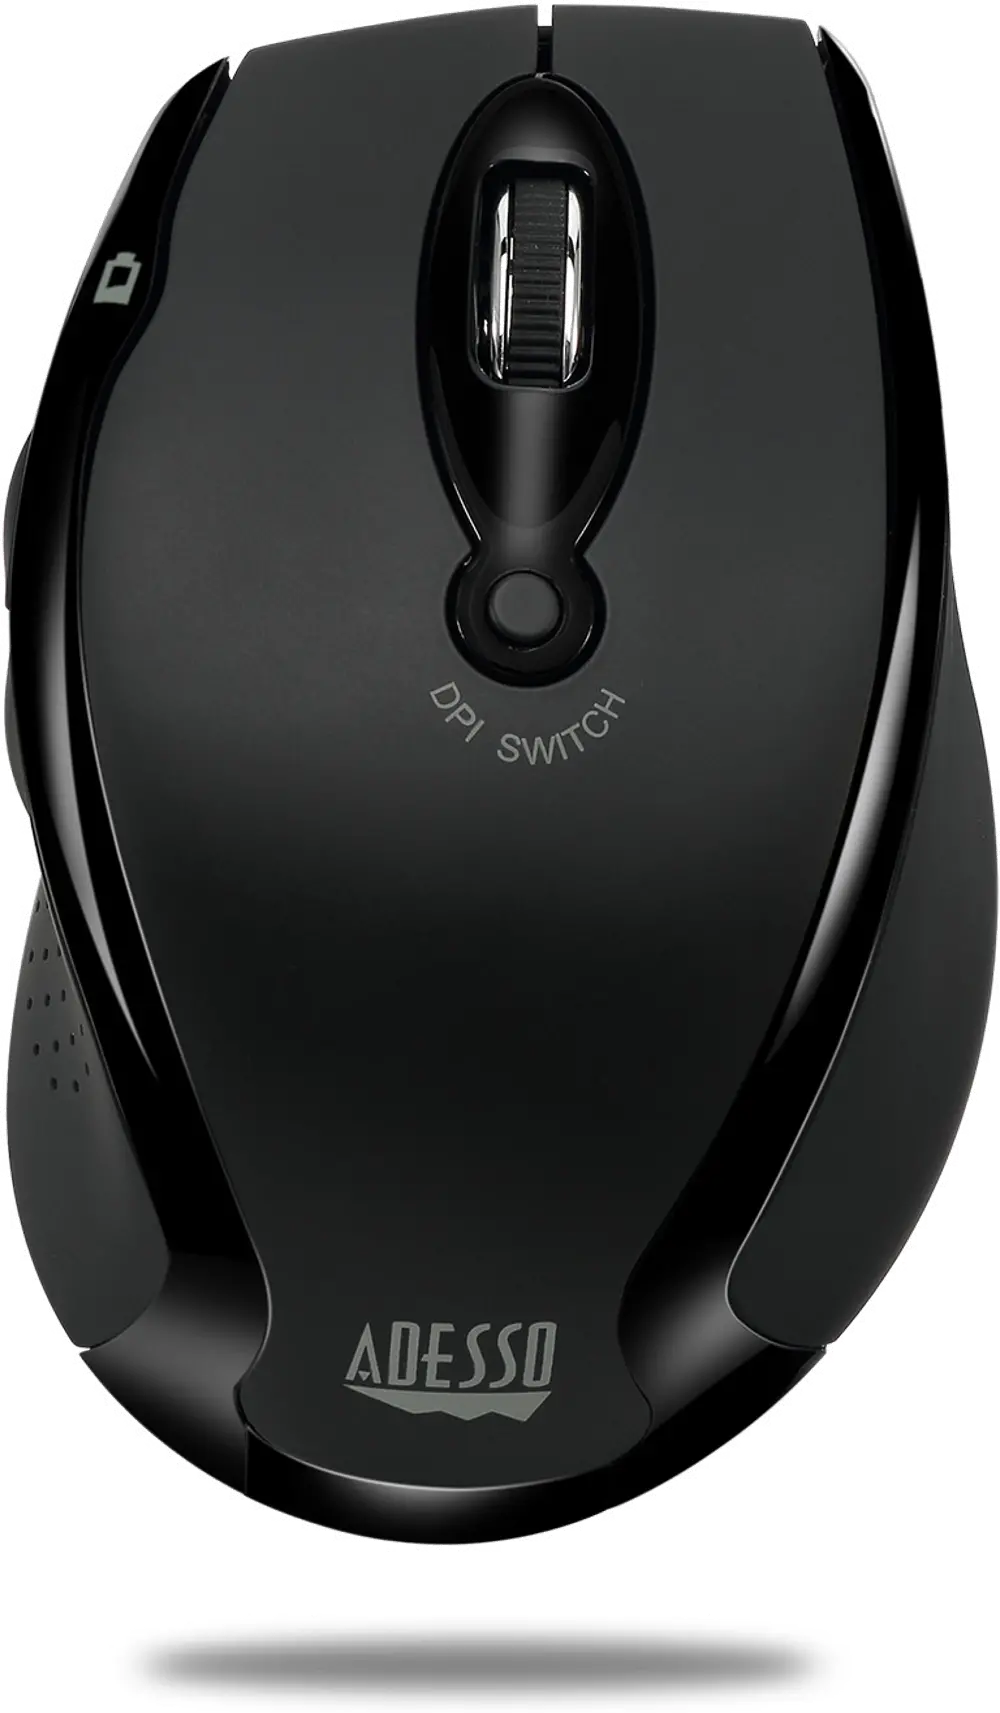 iMOUSE-M20 BLACK Adesso Black Wireless Ergonomic Optical Mouse - iMouse M20-1